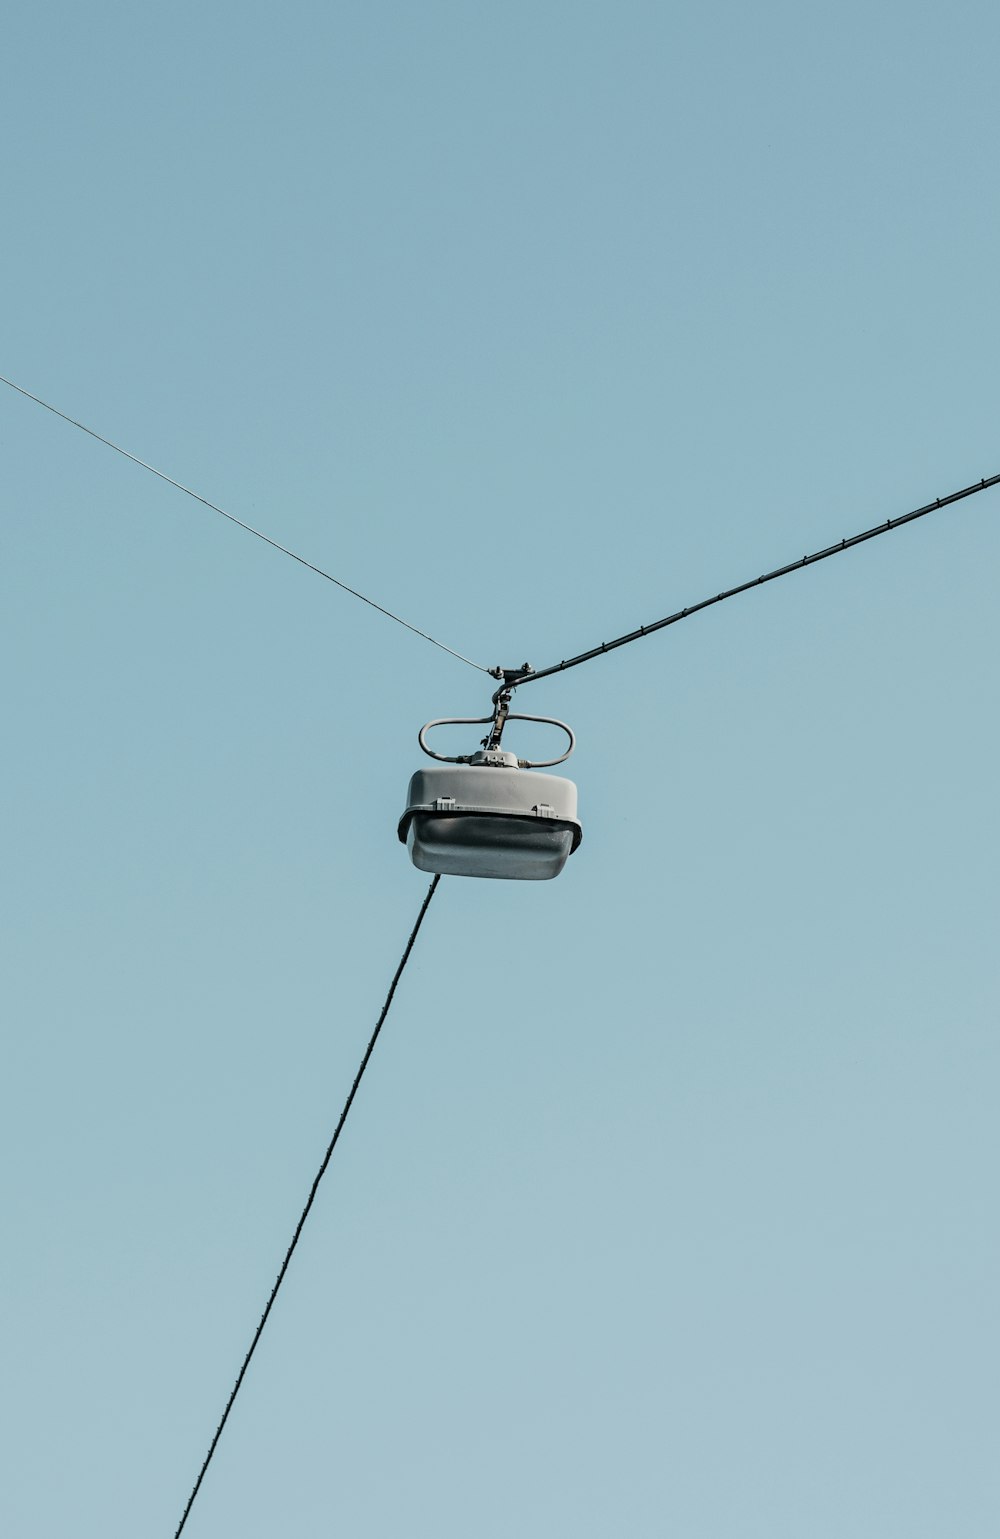 black cable car under blue sky during daytime